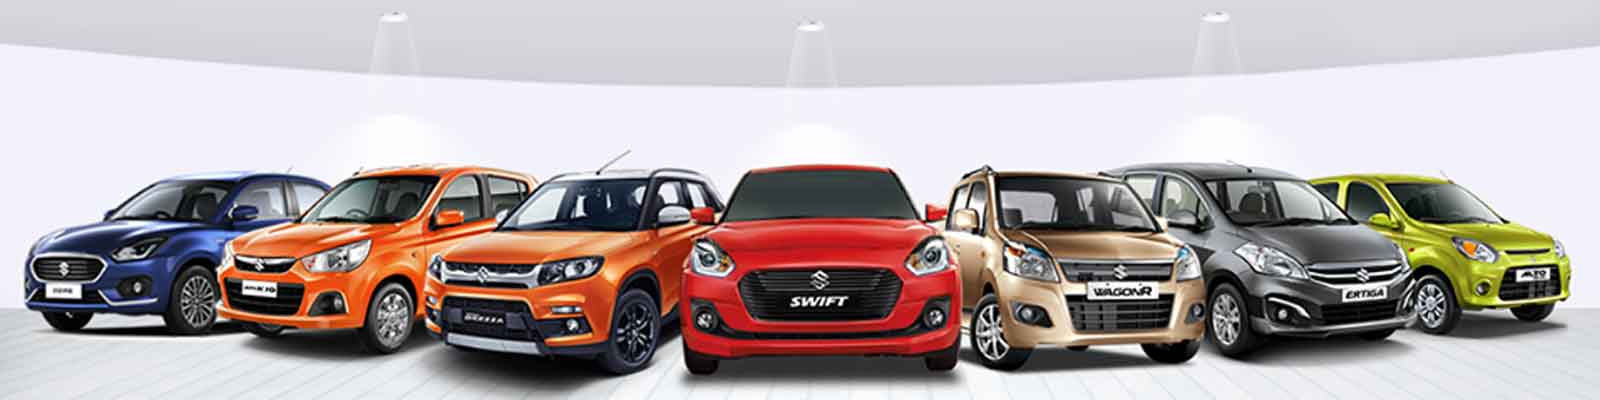 Maruti Suzuki Cars In India Upcoming Maruti Cars Price Models